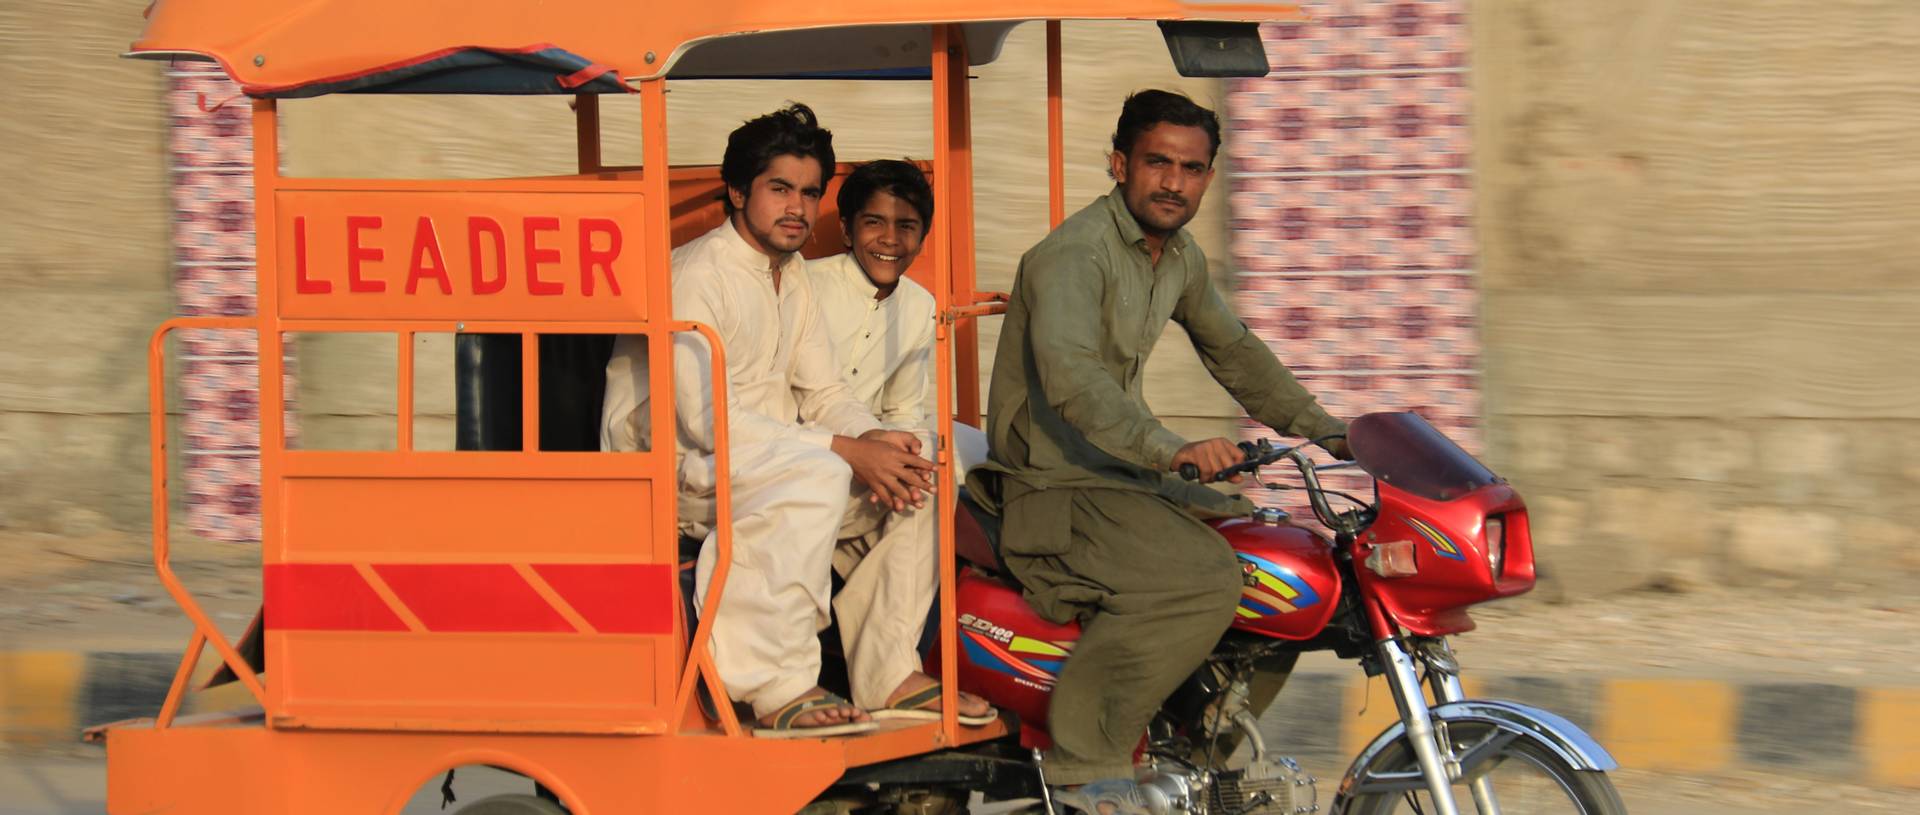 Local Transport in Pakistan.JPG